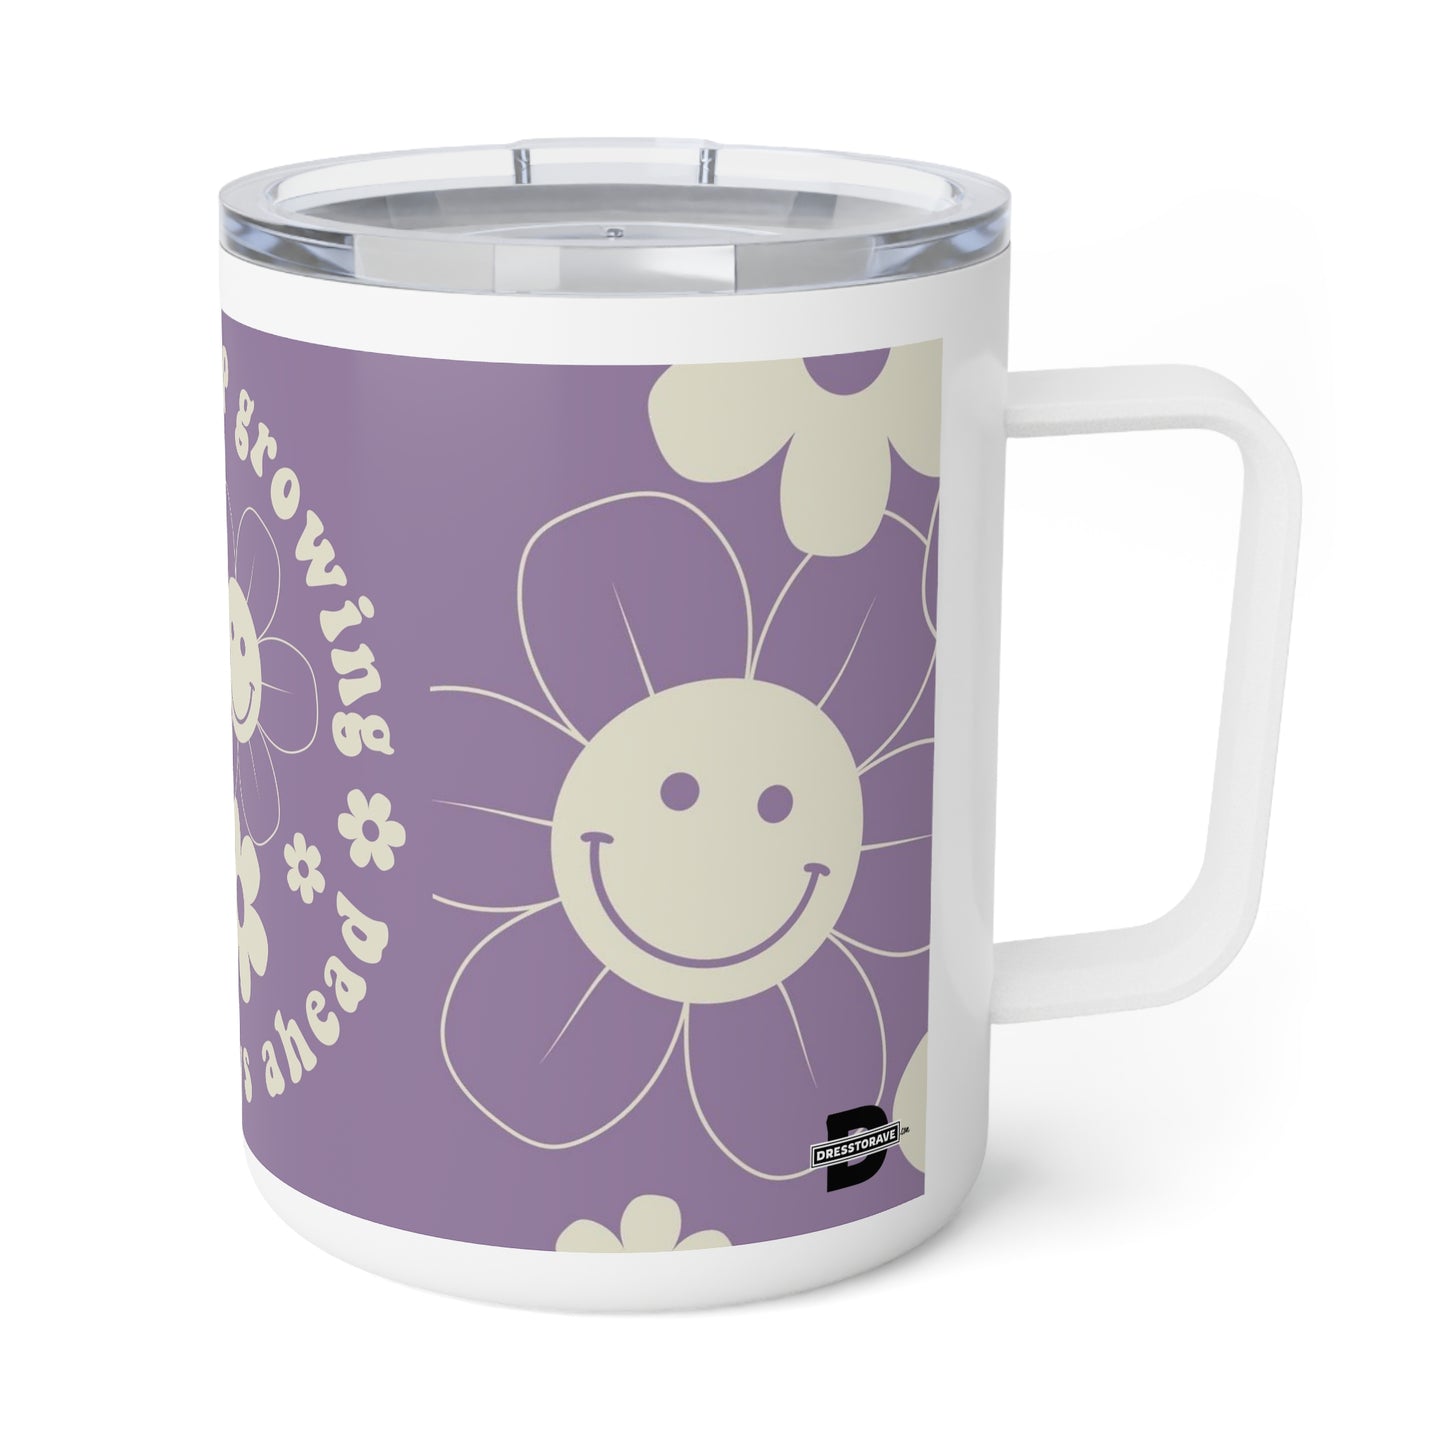 Keep Growing | Insulated Coffee Mug, 10oz